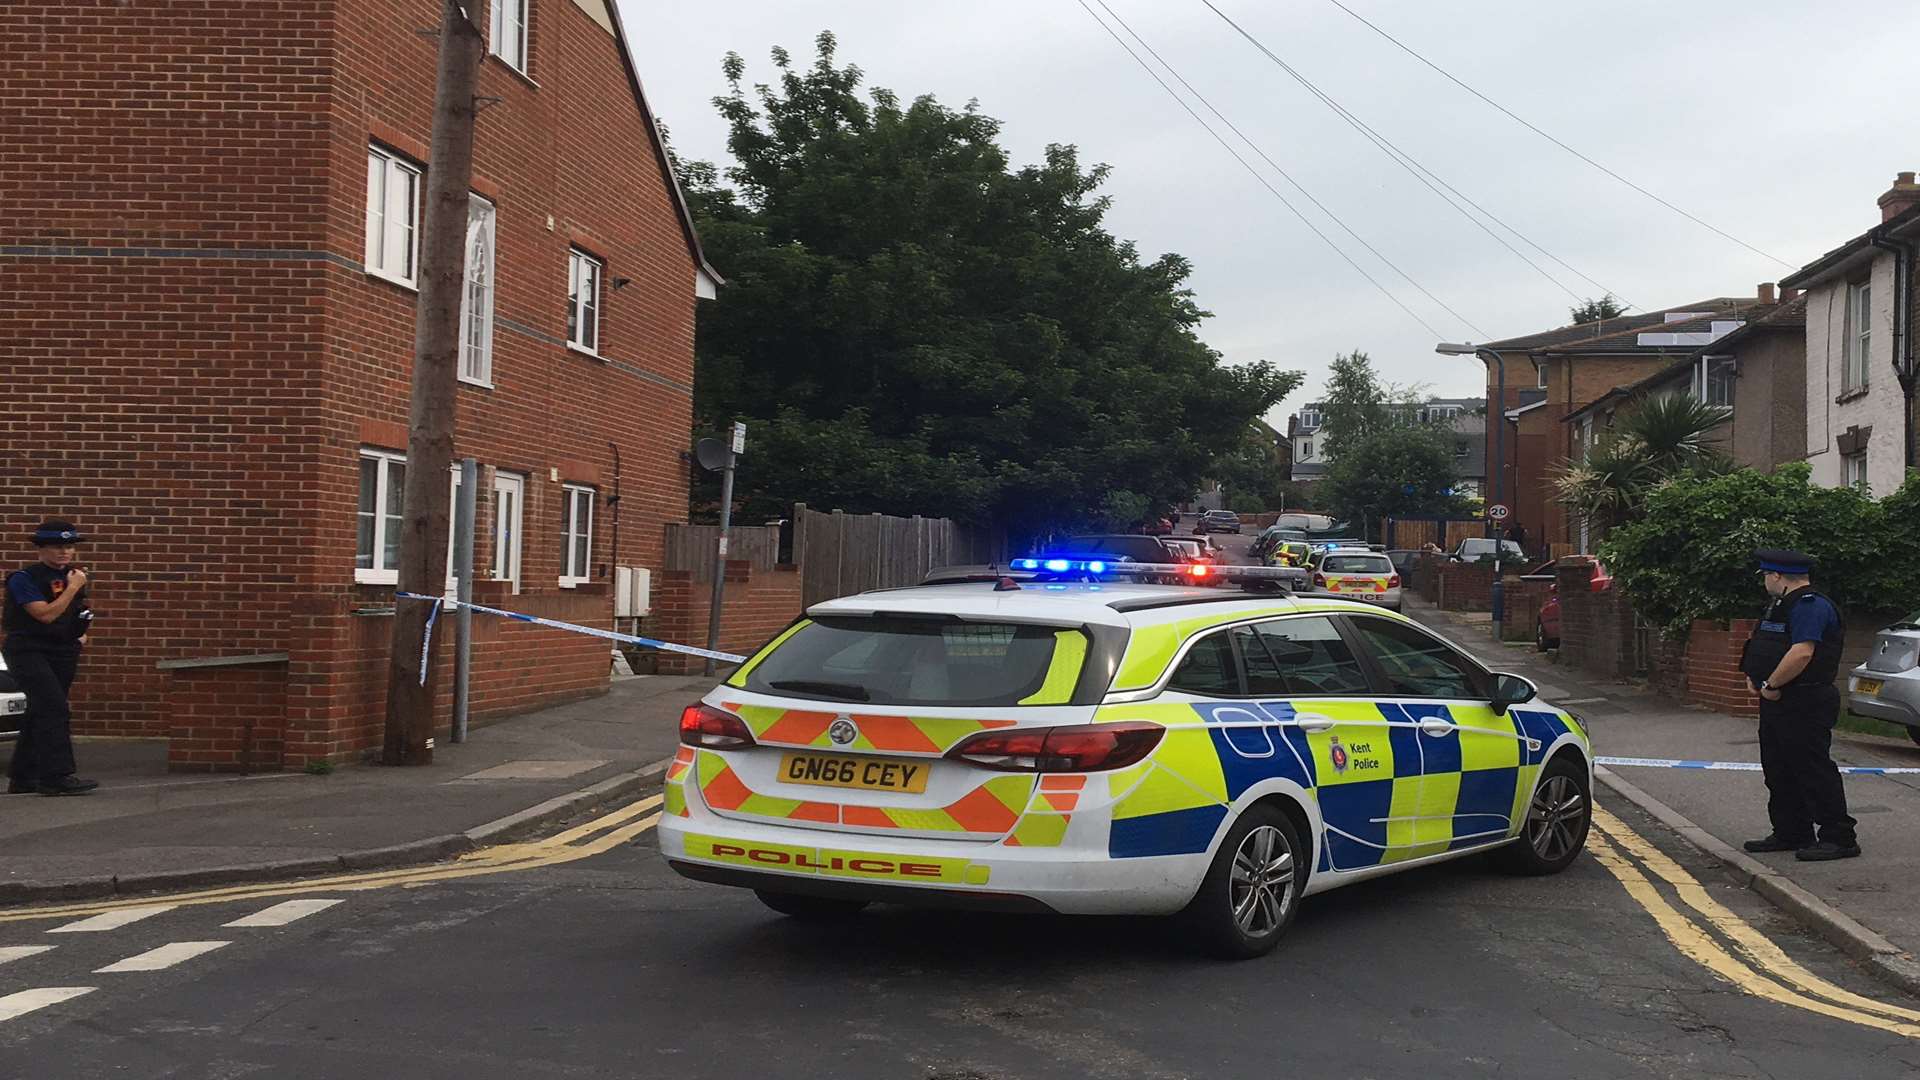 Police sealed off roads near Ben Sharman's home